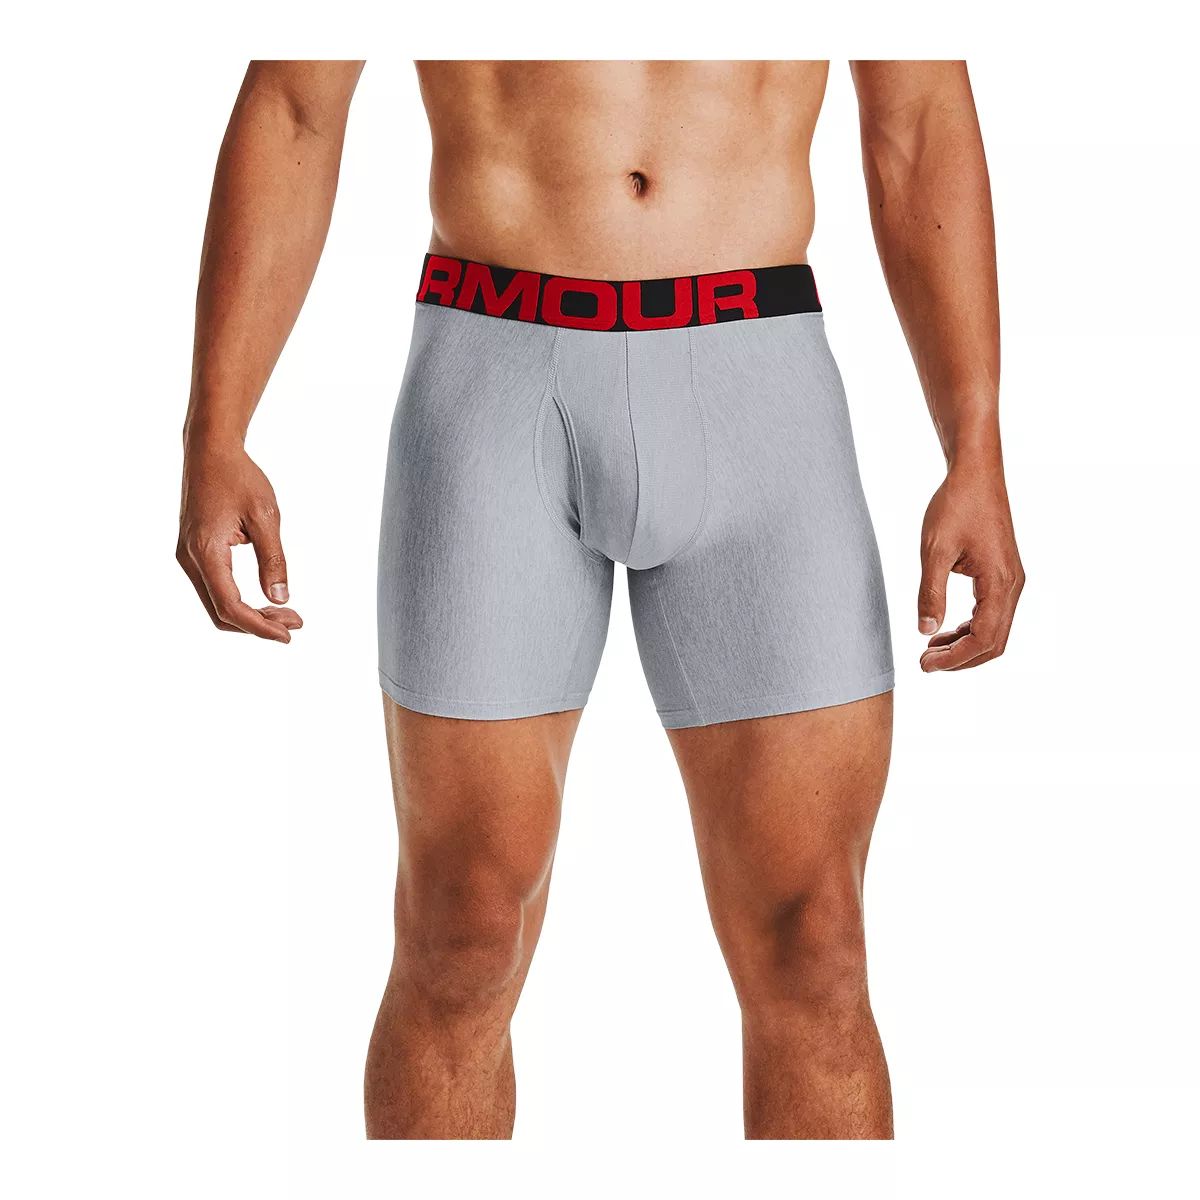 Reebok Men's Tech Comfort Performance Low Rise Briefs Underwear, 6